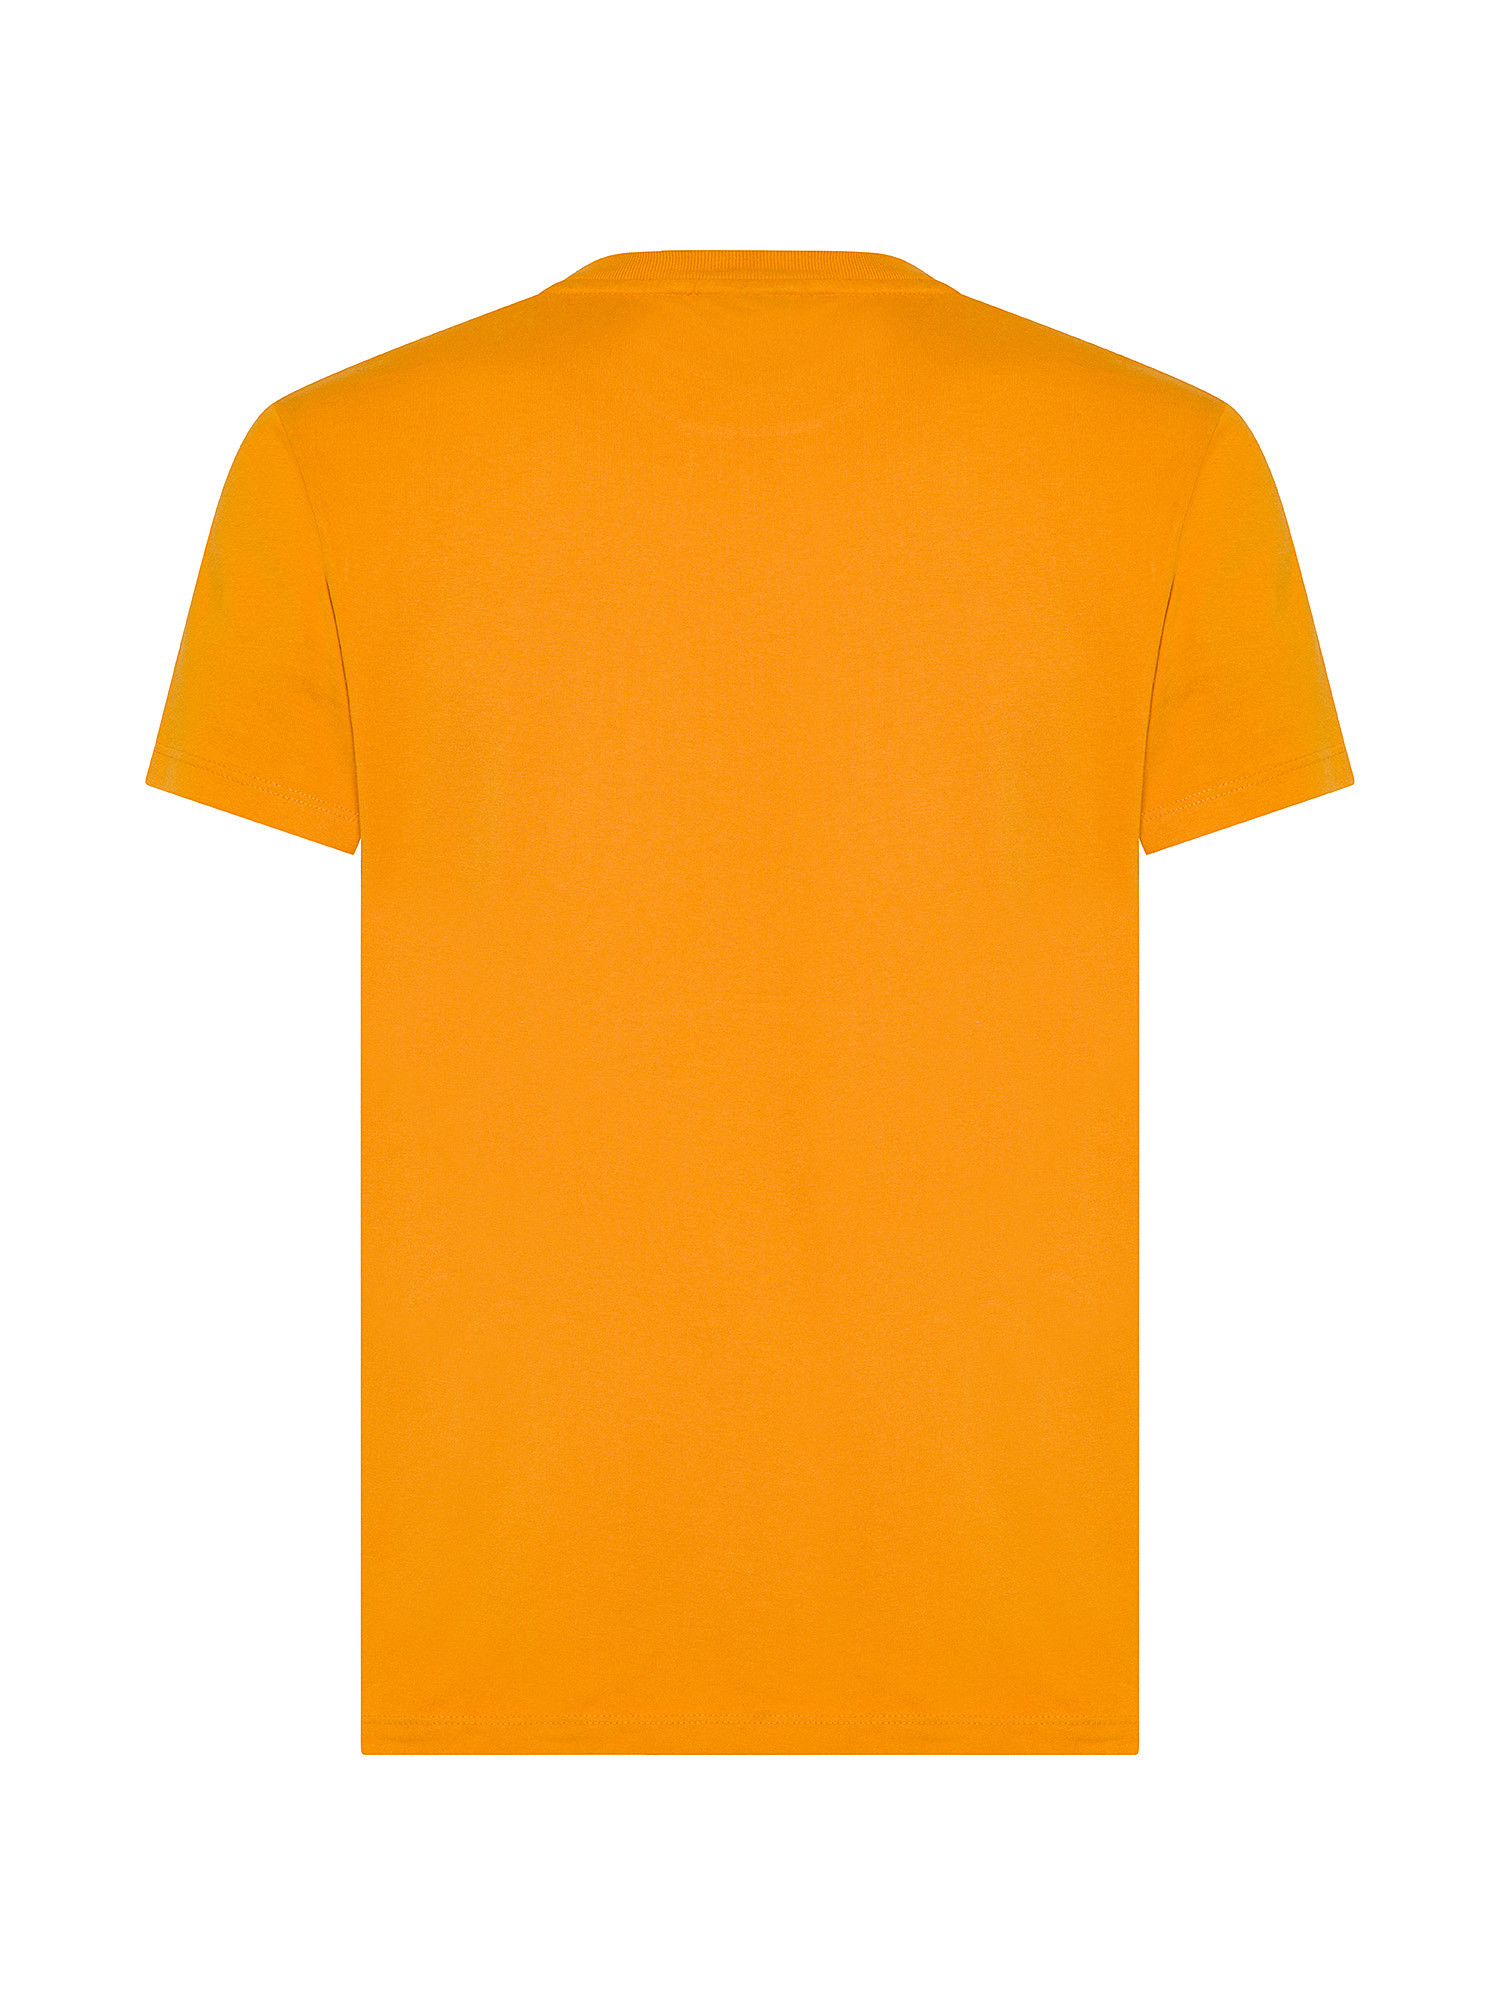 Superdry Crew Neck Logo T-Shirt, Orange, large image number 1